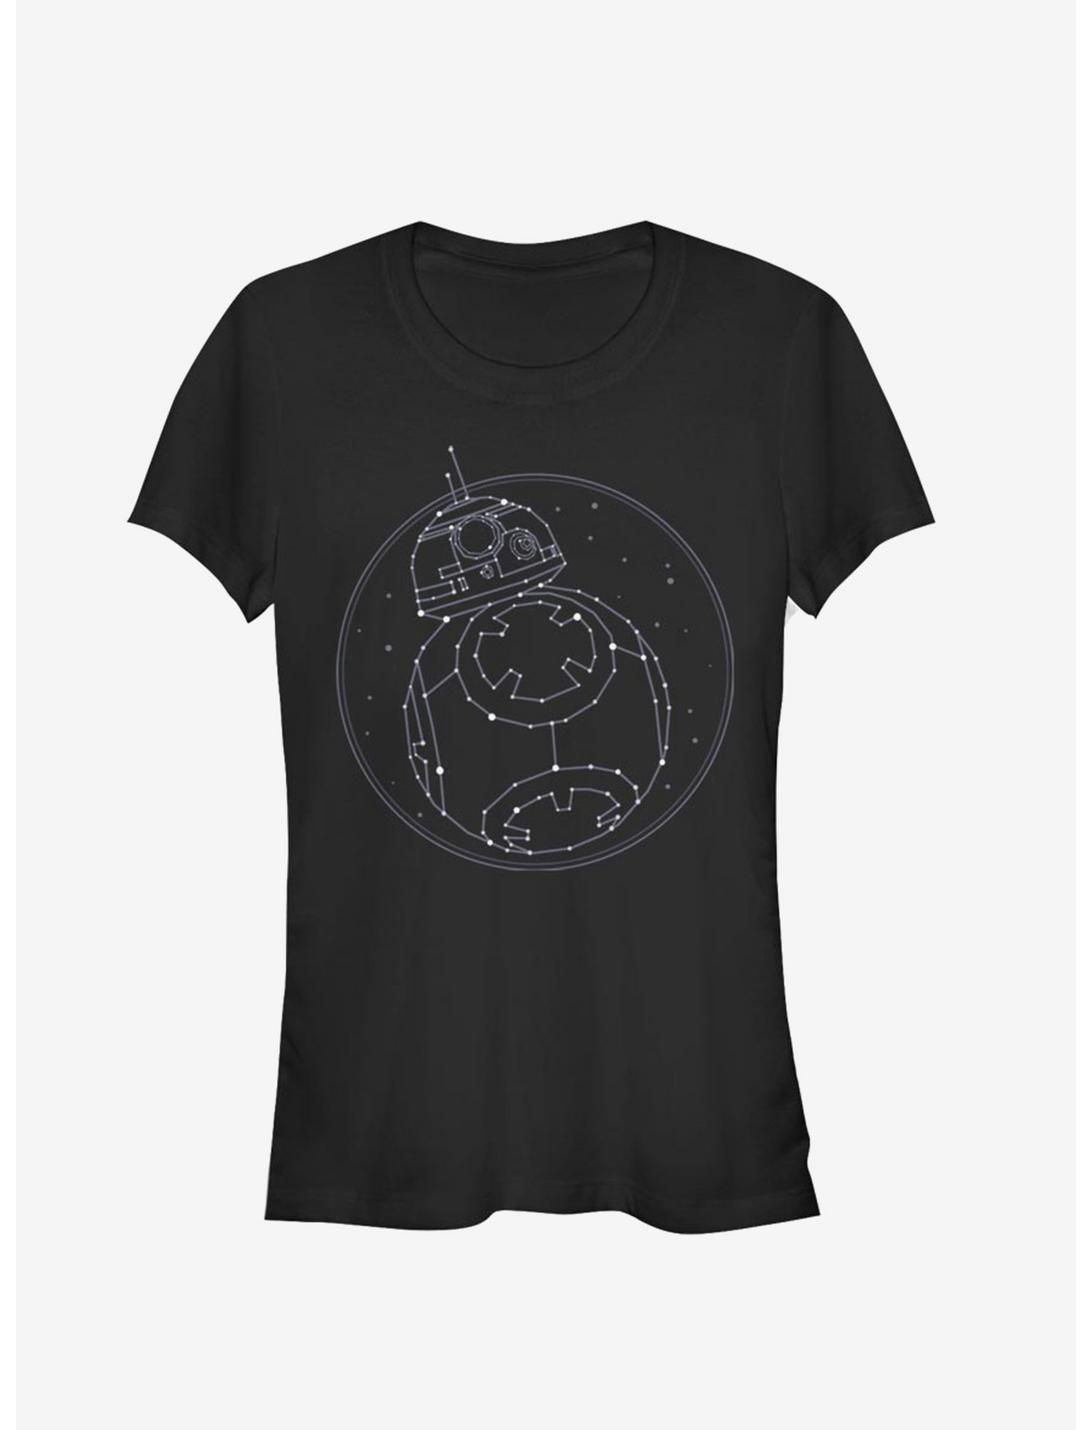 Star Wars Episode IX The Rise Of Skywalker Constellation Girls T-Shirt, BLACK, hi-res